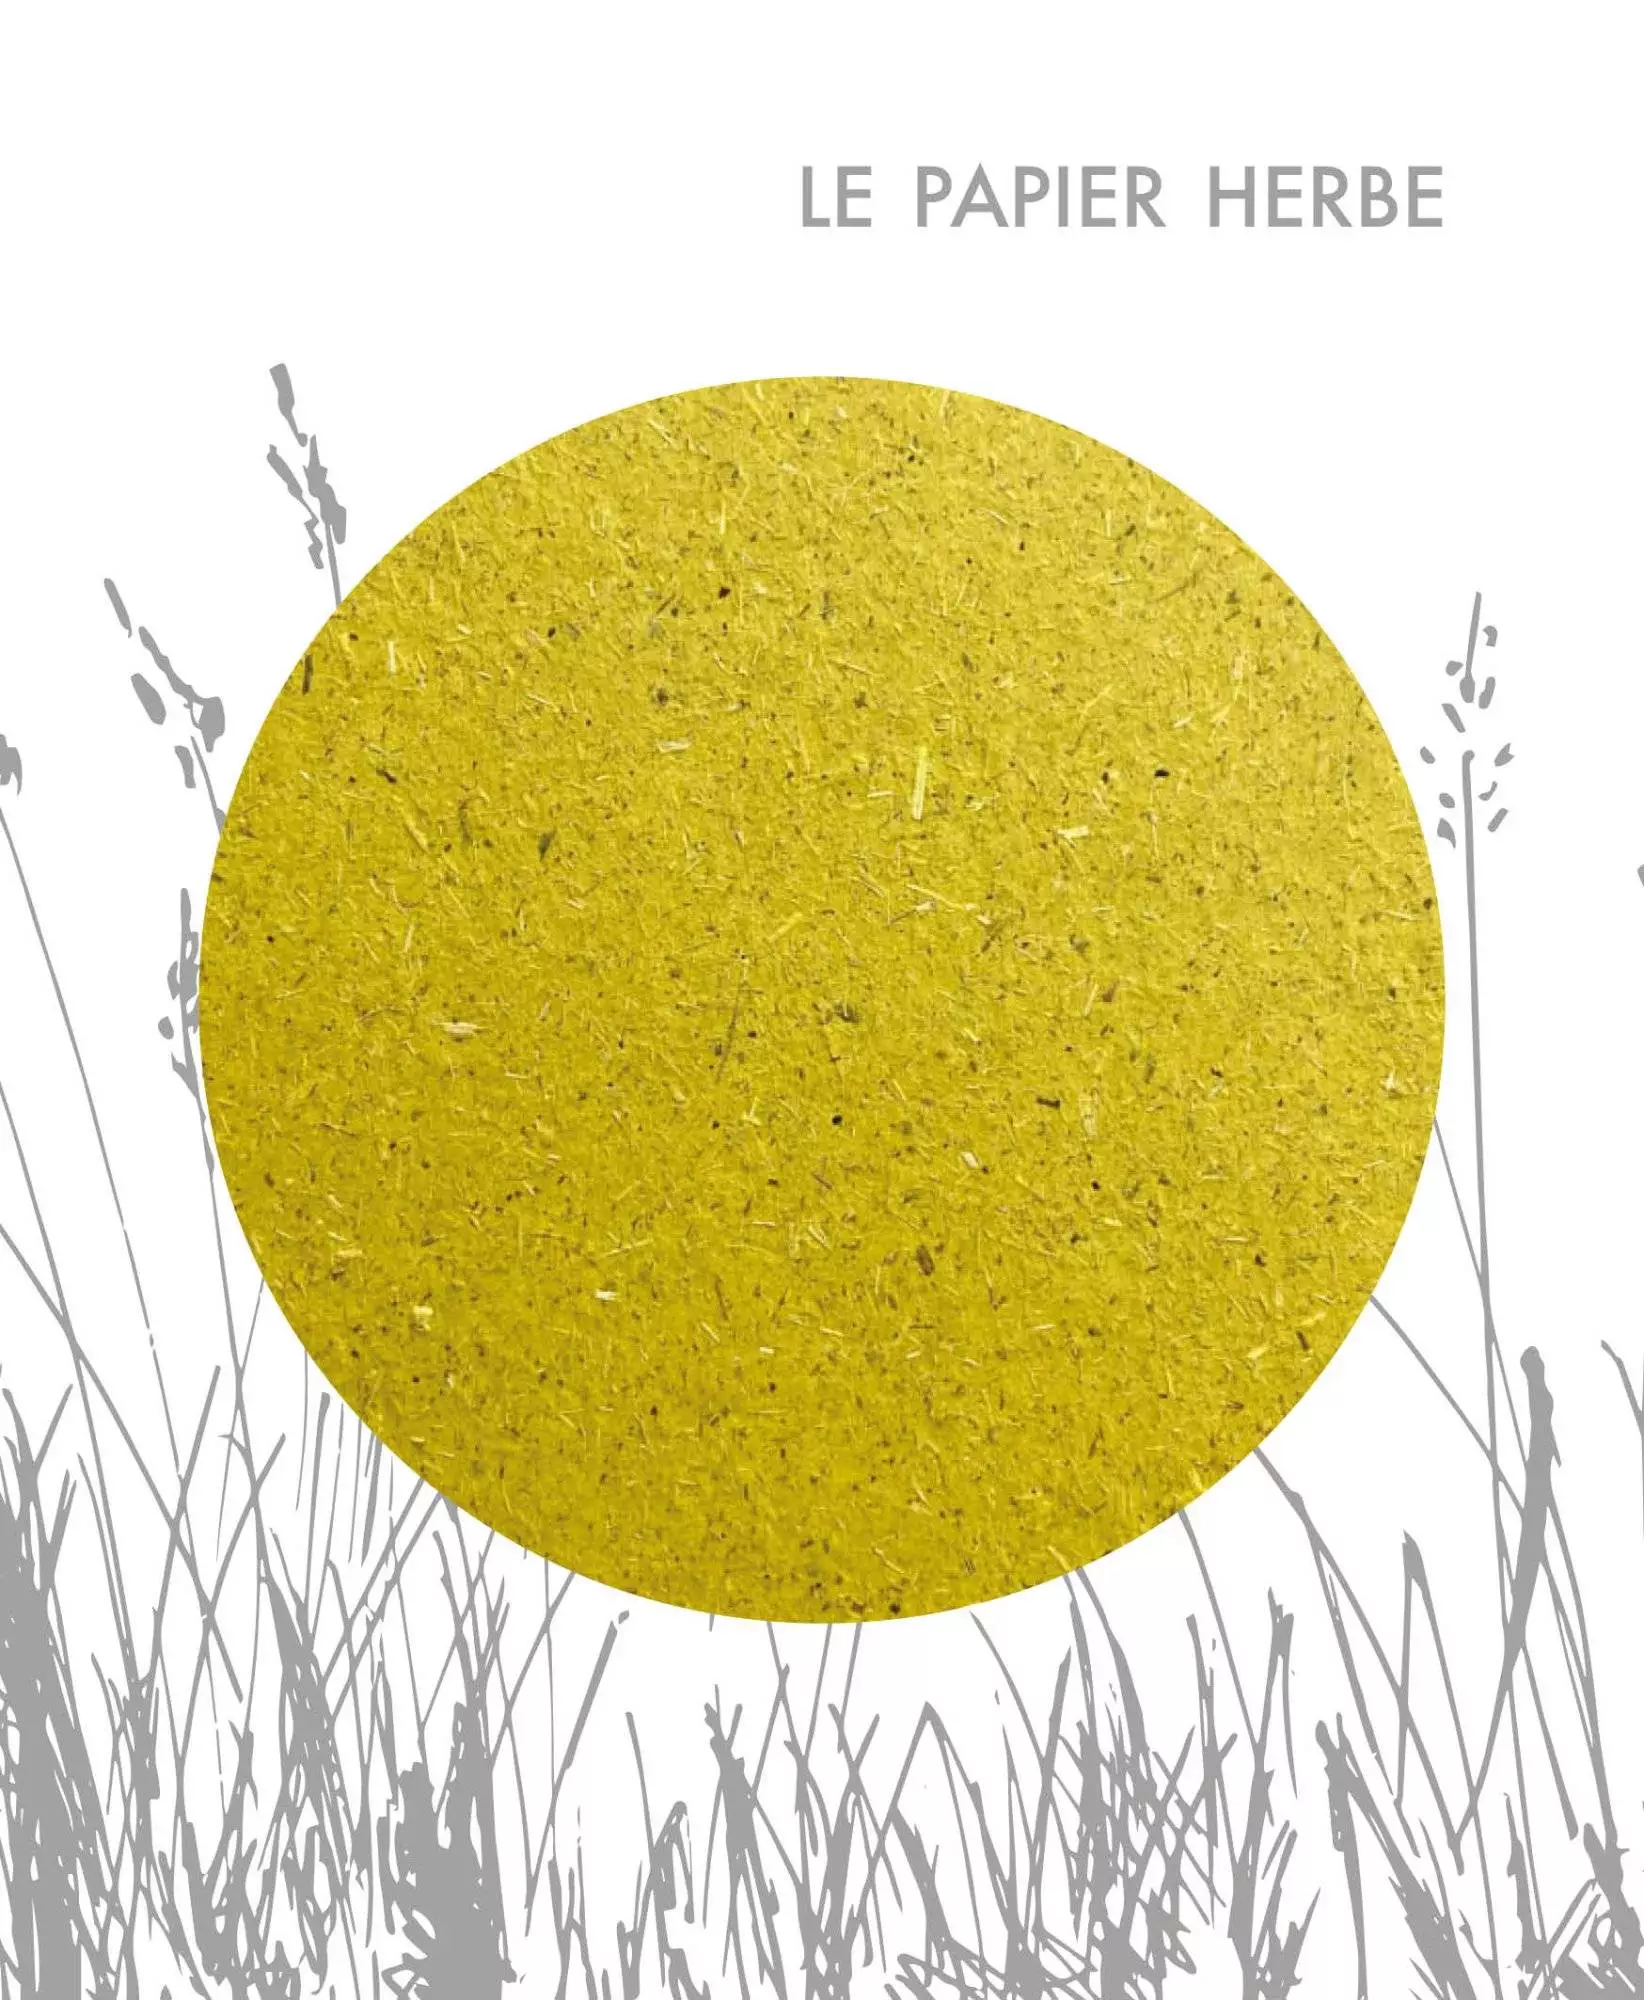 Papier-biocycle-herbe-grafik-plus3